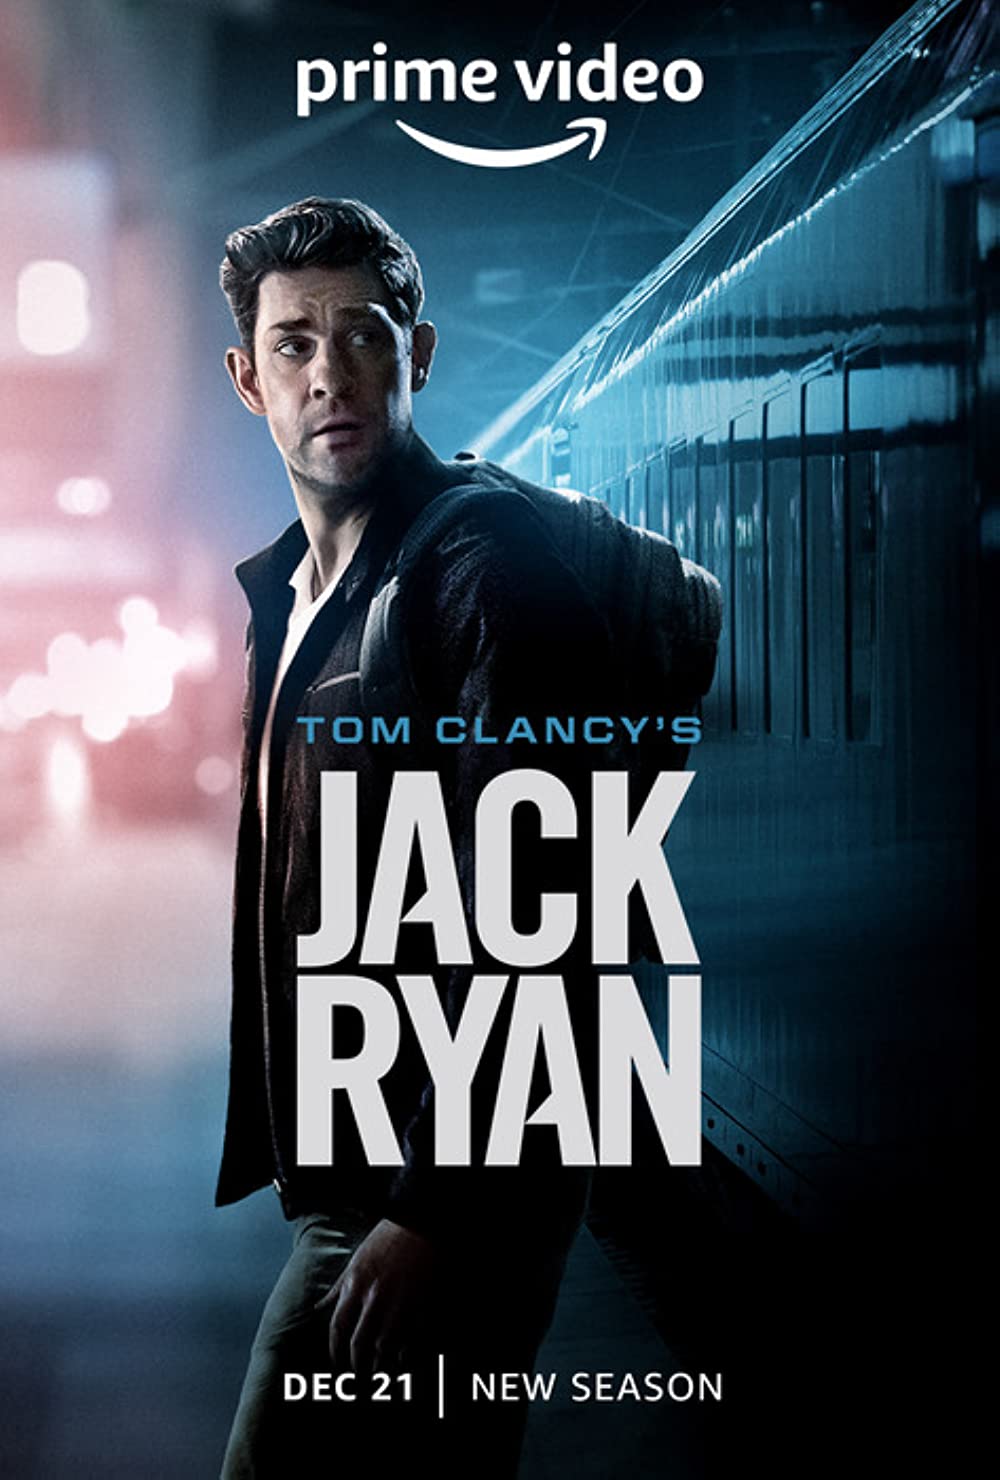 Tom Clancy's Jack Ryan - Season 1